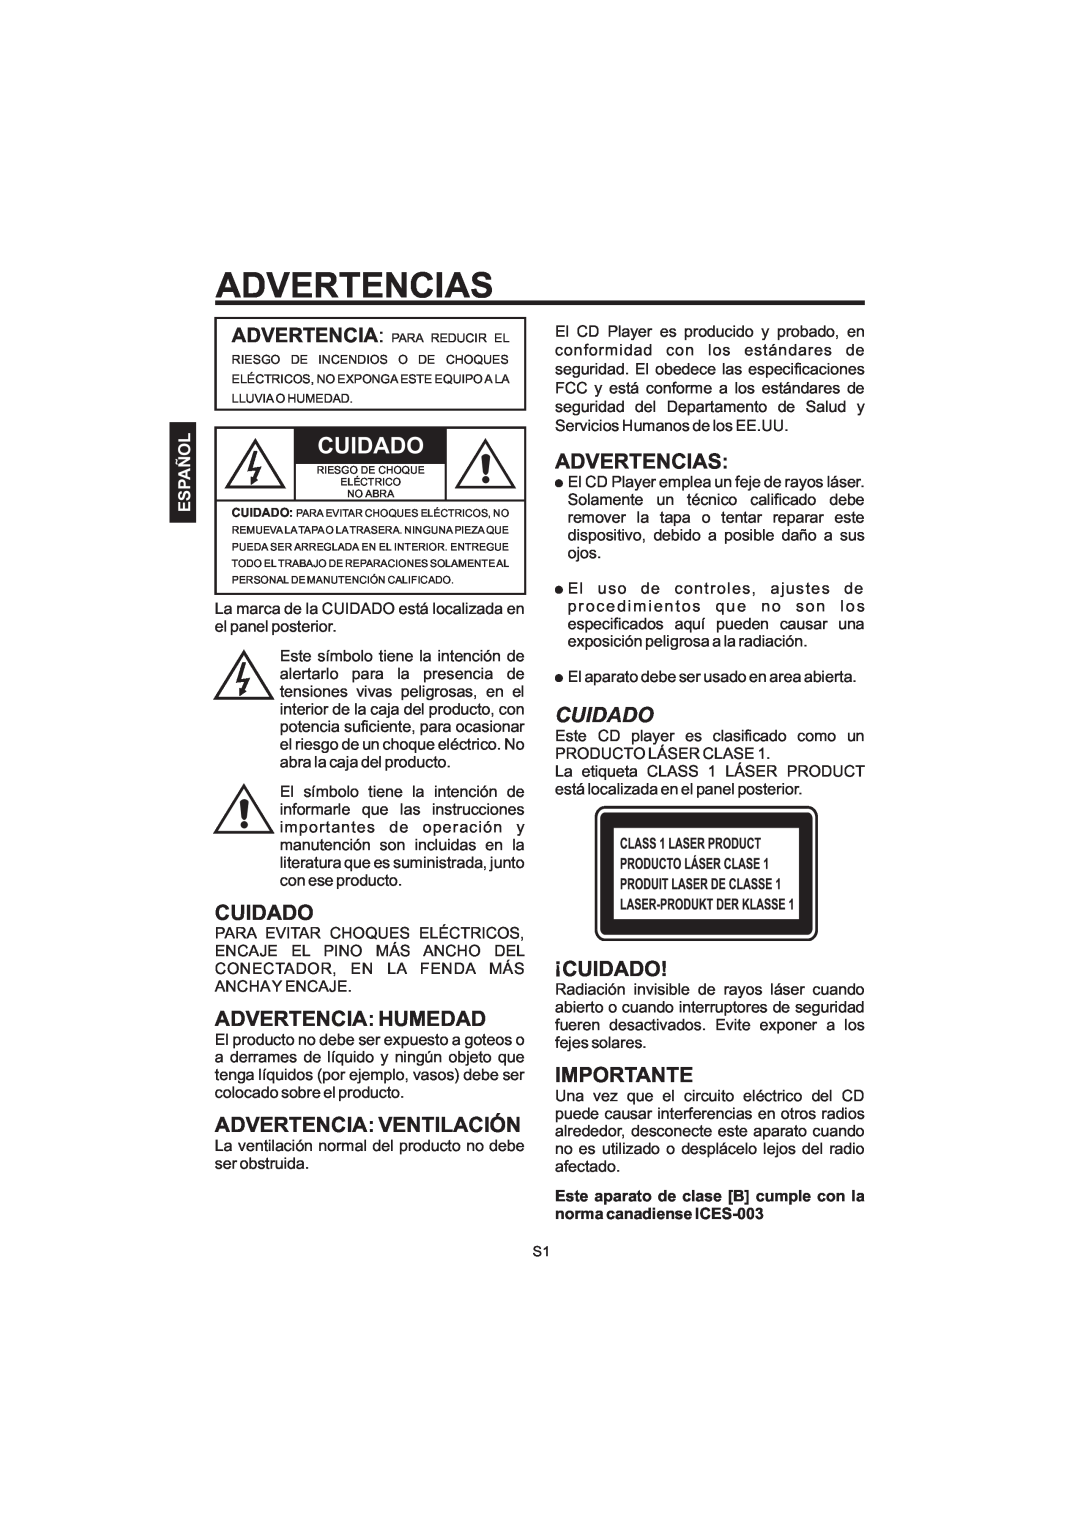 The Singing Machine STVG-520 Advertencias, Cuidado, Advertencia Humedad, Advertencia Ventilación, Importante, Español 